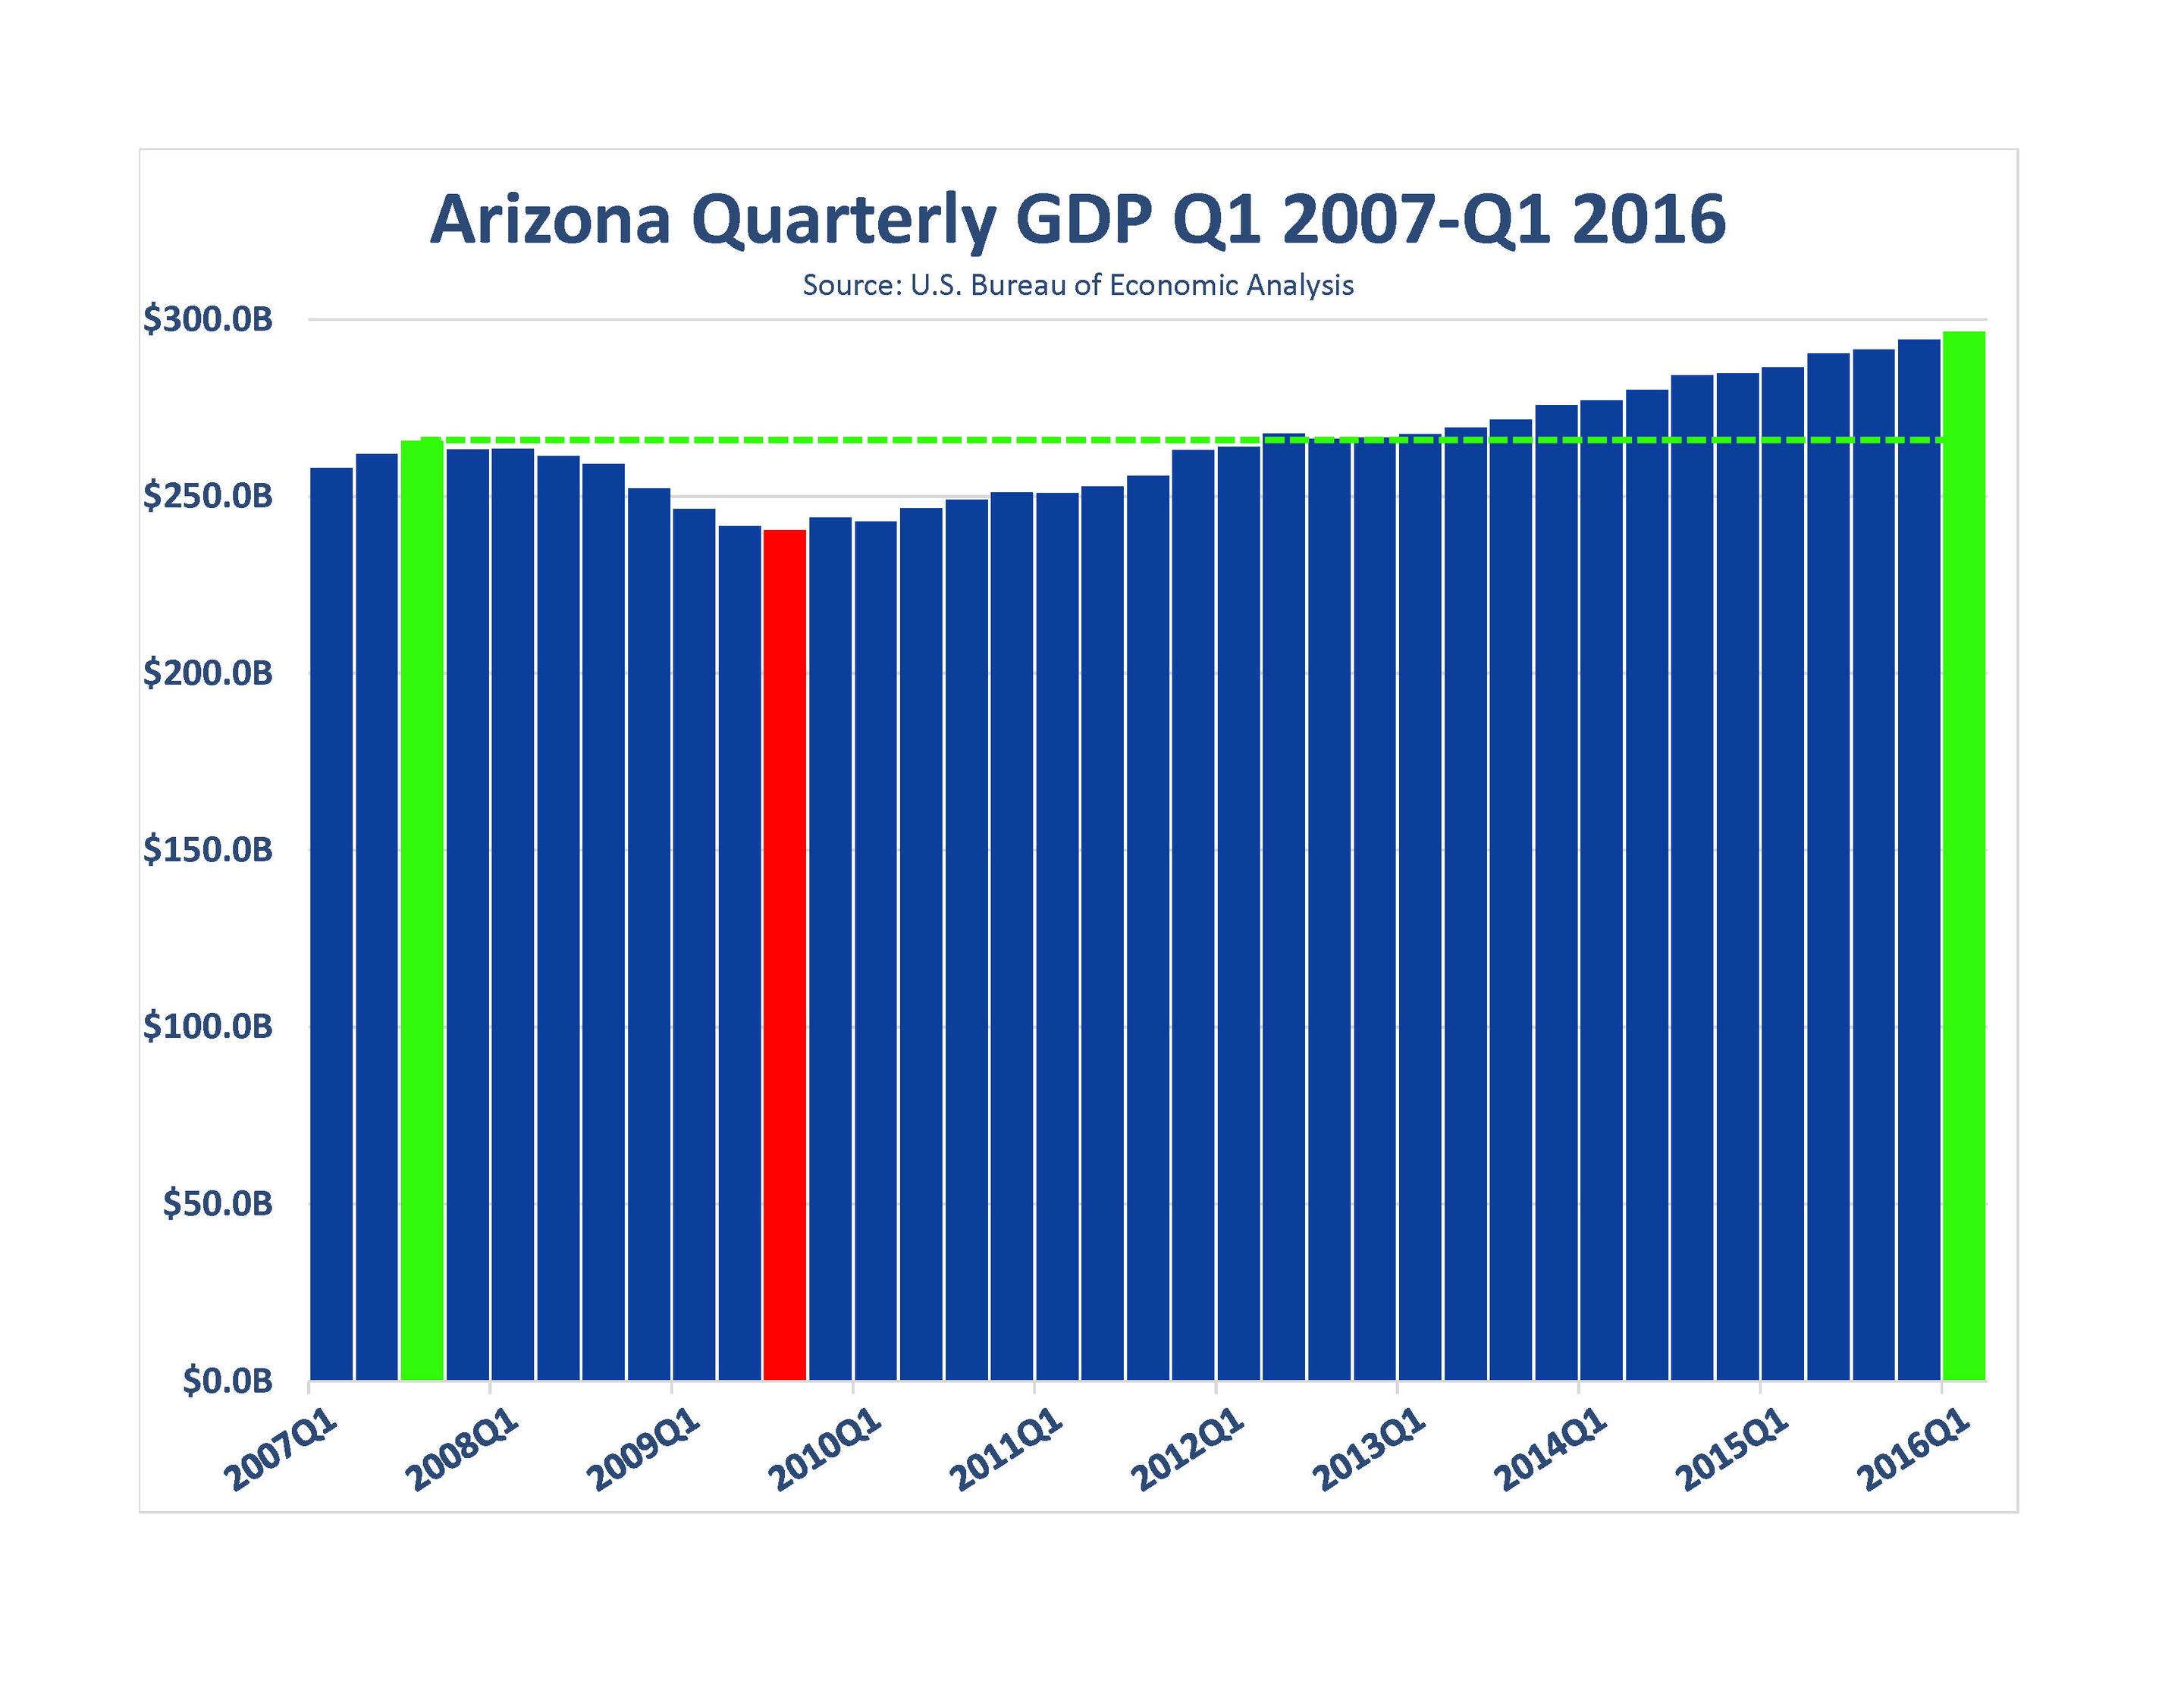 Arizona quarter GDP hits record high; beats U.S. GDP growth Phoenix